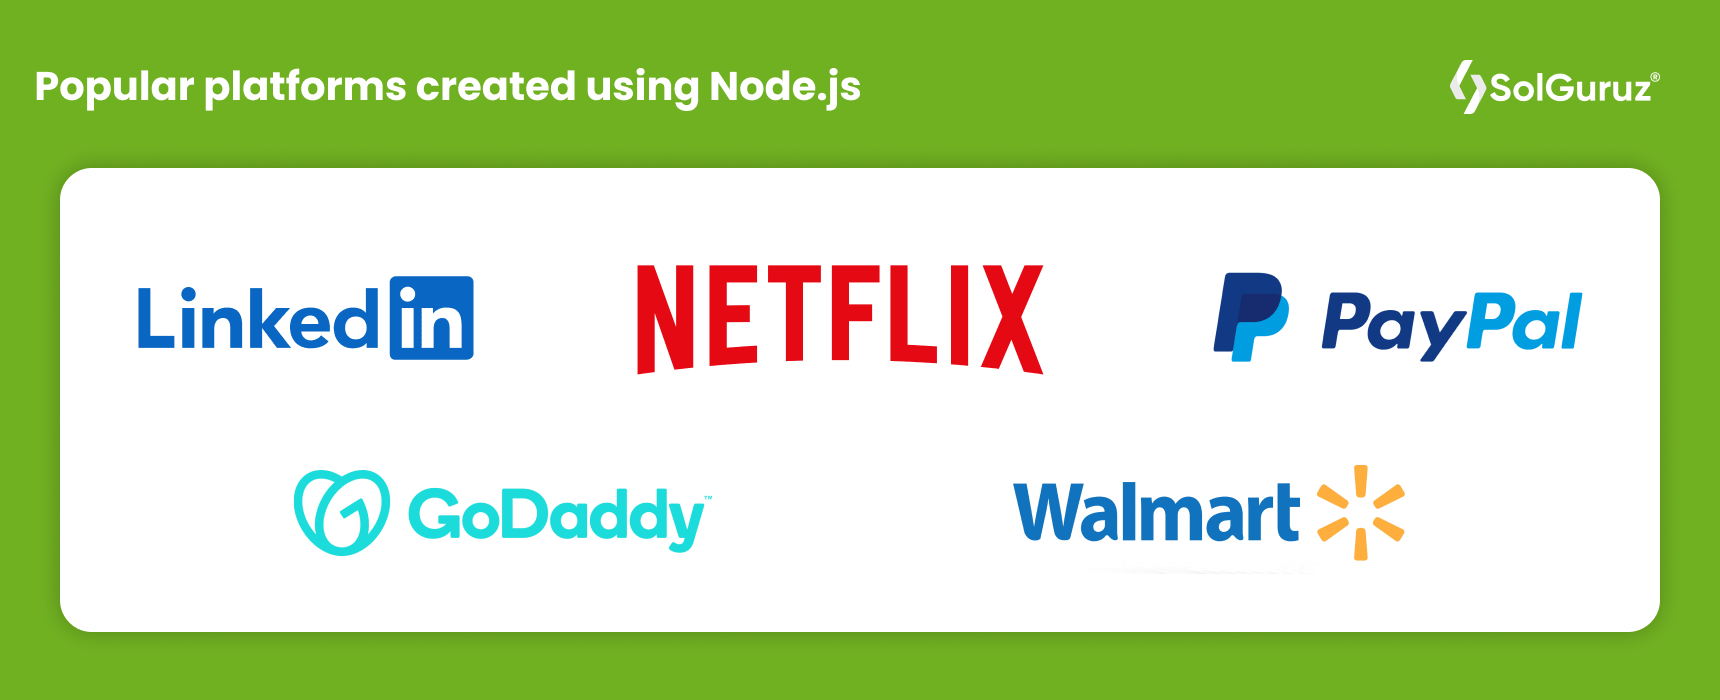 Popular platforms created using Node.js